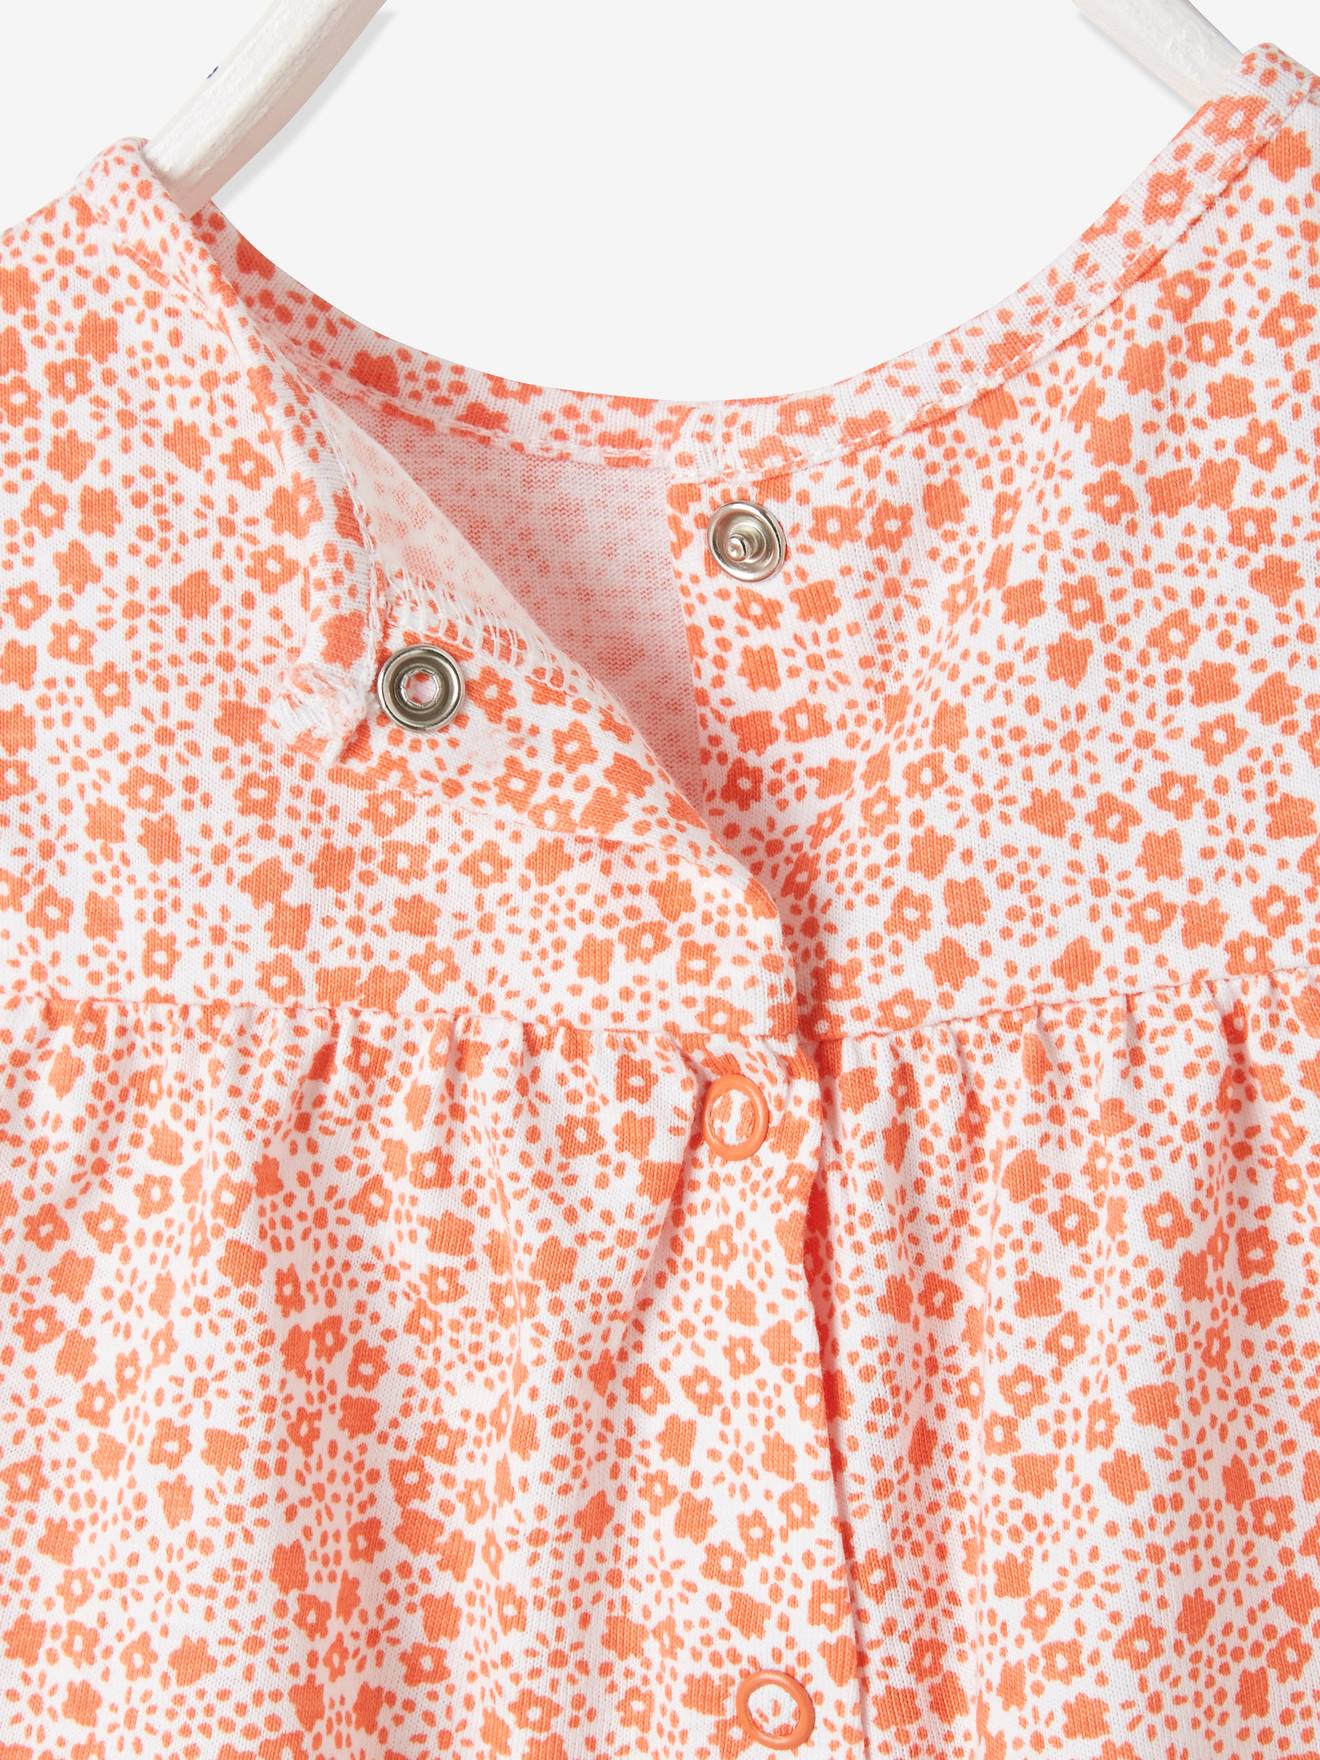 50-62 - Baby Mädchen Sommer Babymode Uni Rose Jersey T-Shirt Rose 